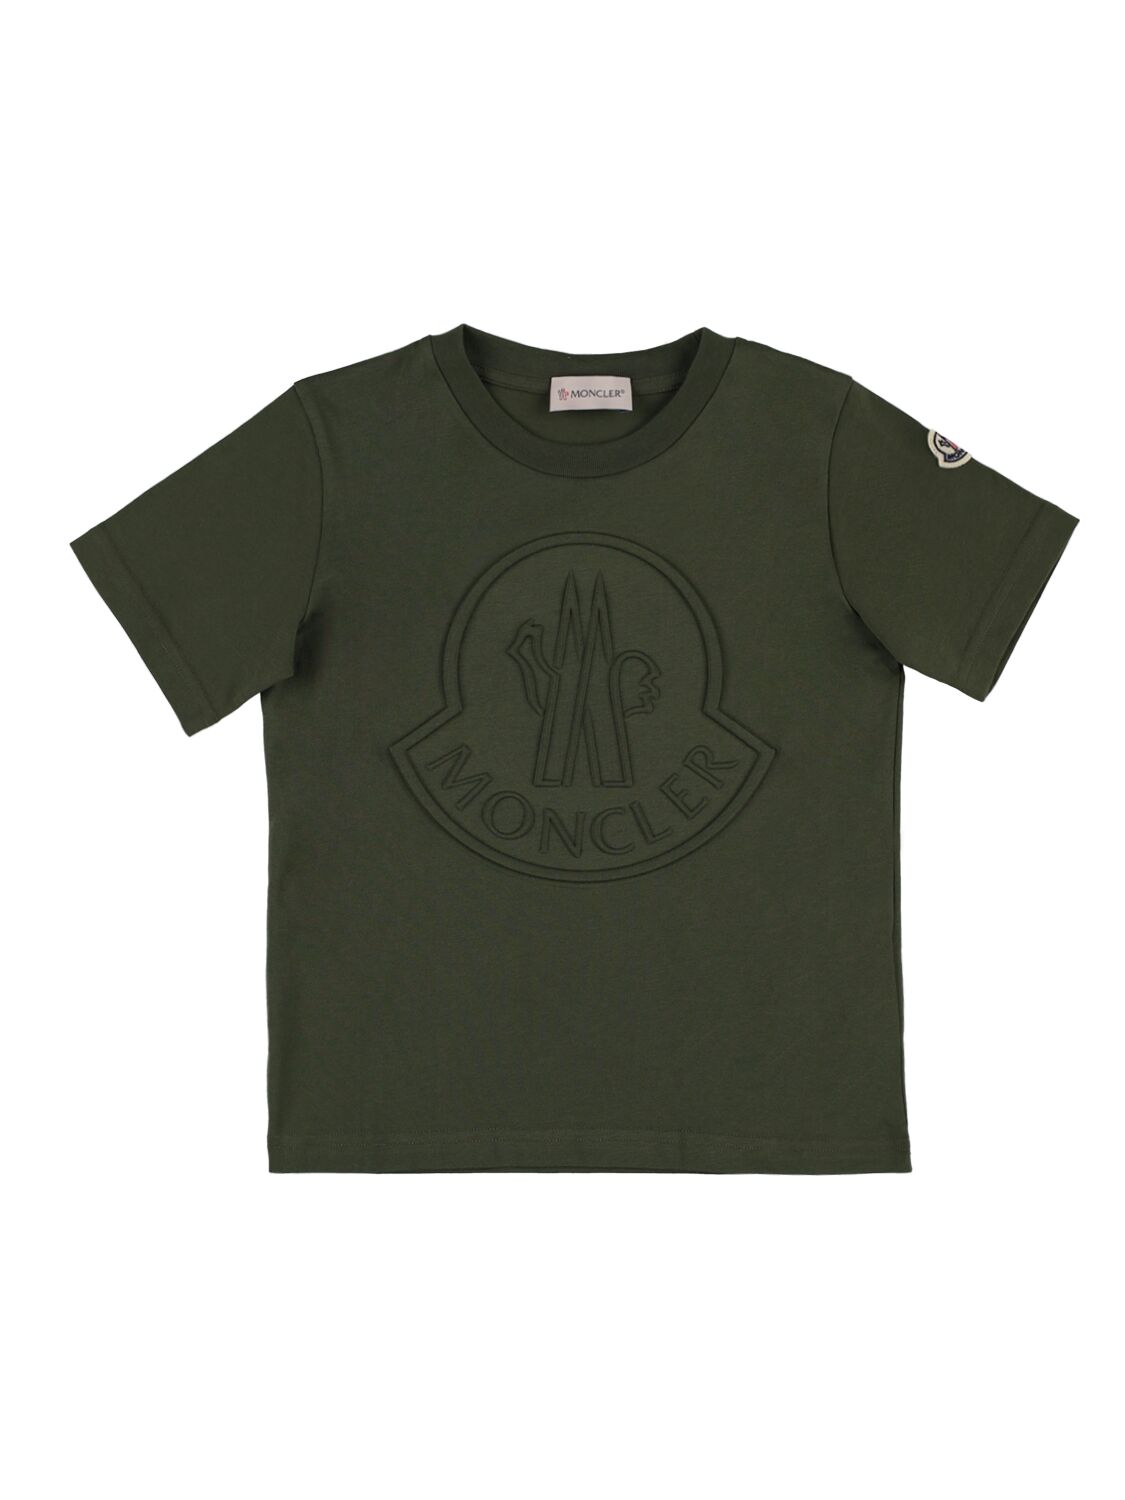 Moncler Kids' Cotton Jersey T-shirt In Dark Green